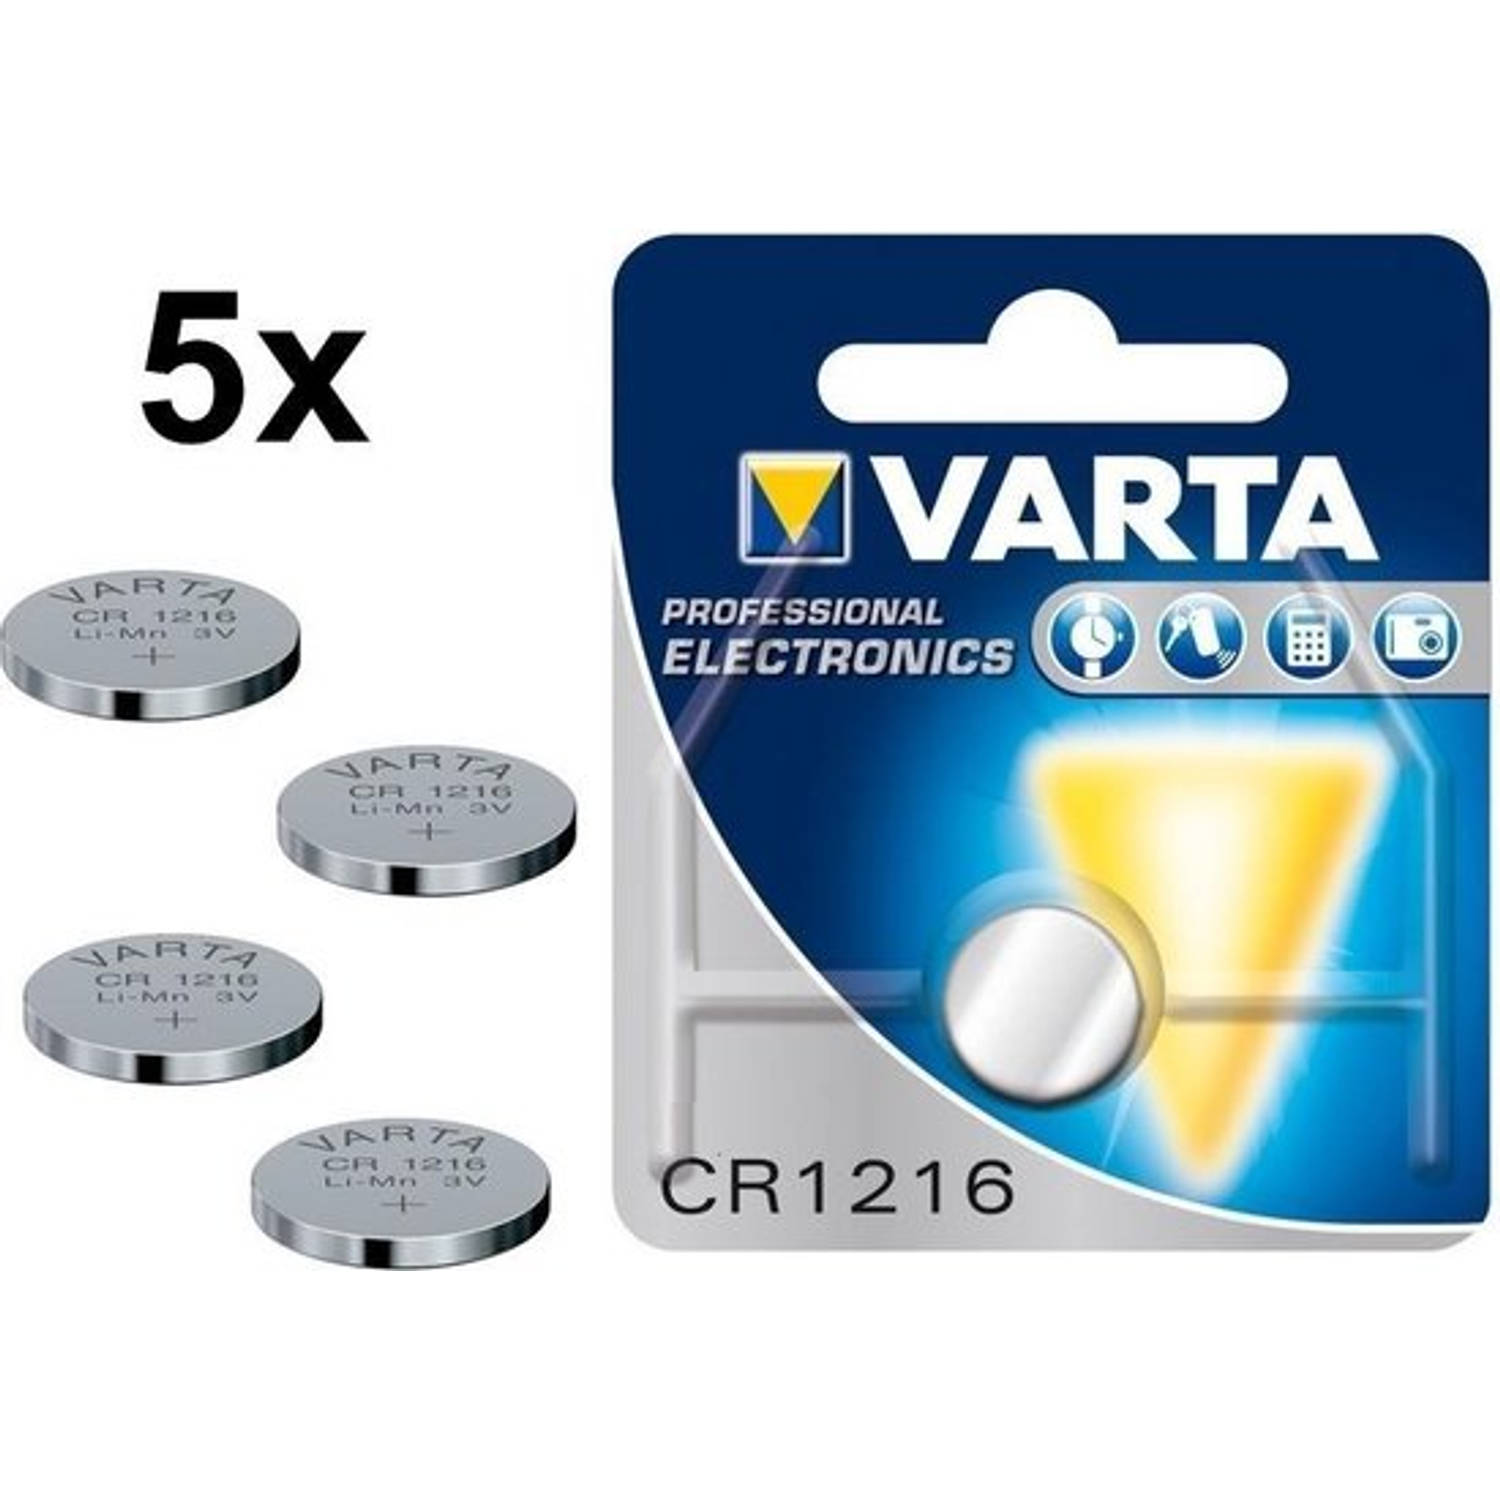 5 Stuks - Varta Professional Electronics CR1216 6216 25mAh 3V knoopcel batterij